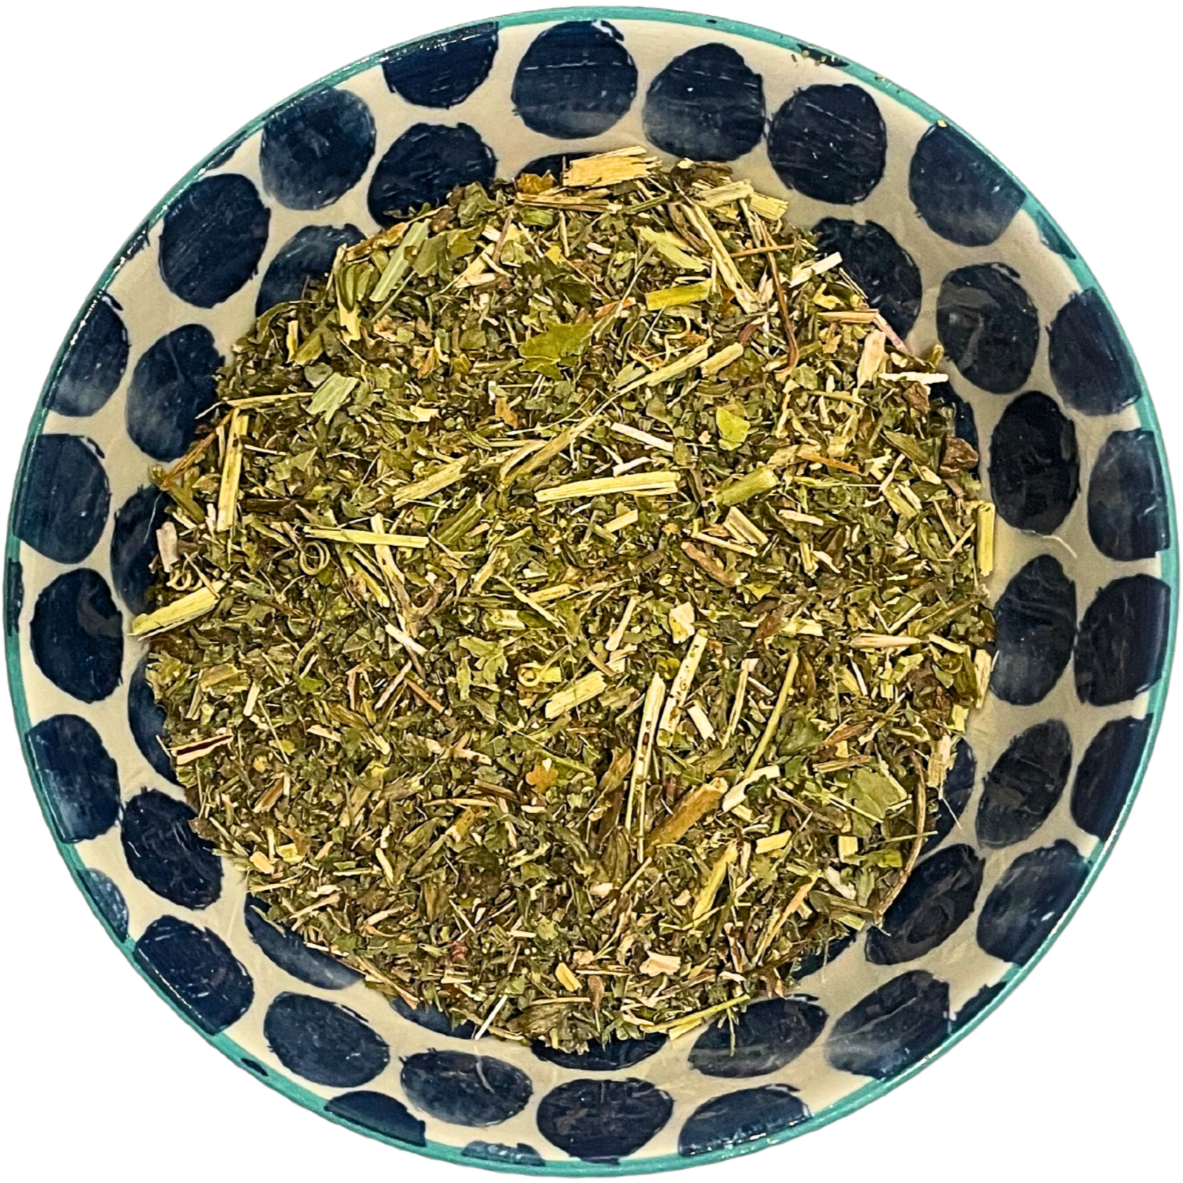 Valerian Nights – herbal tea for a good night&